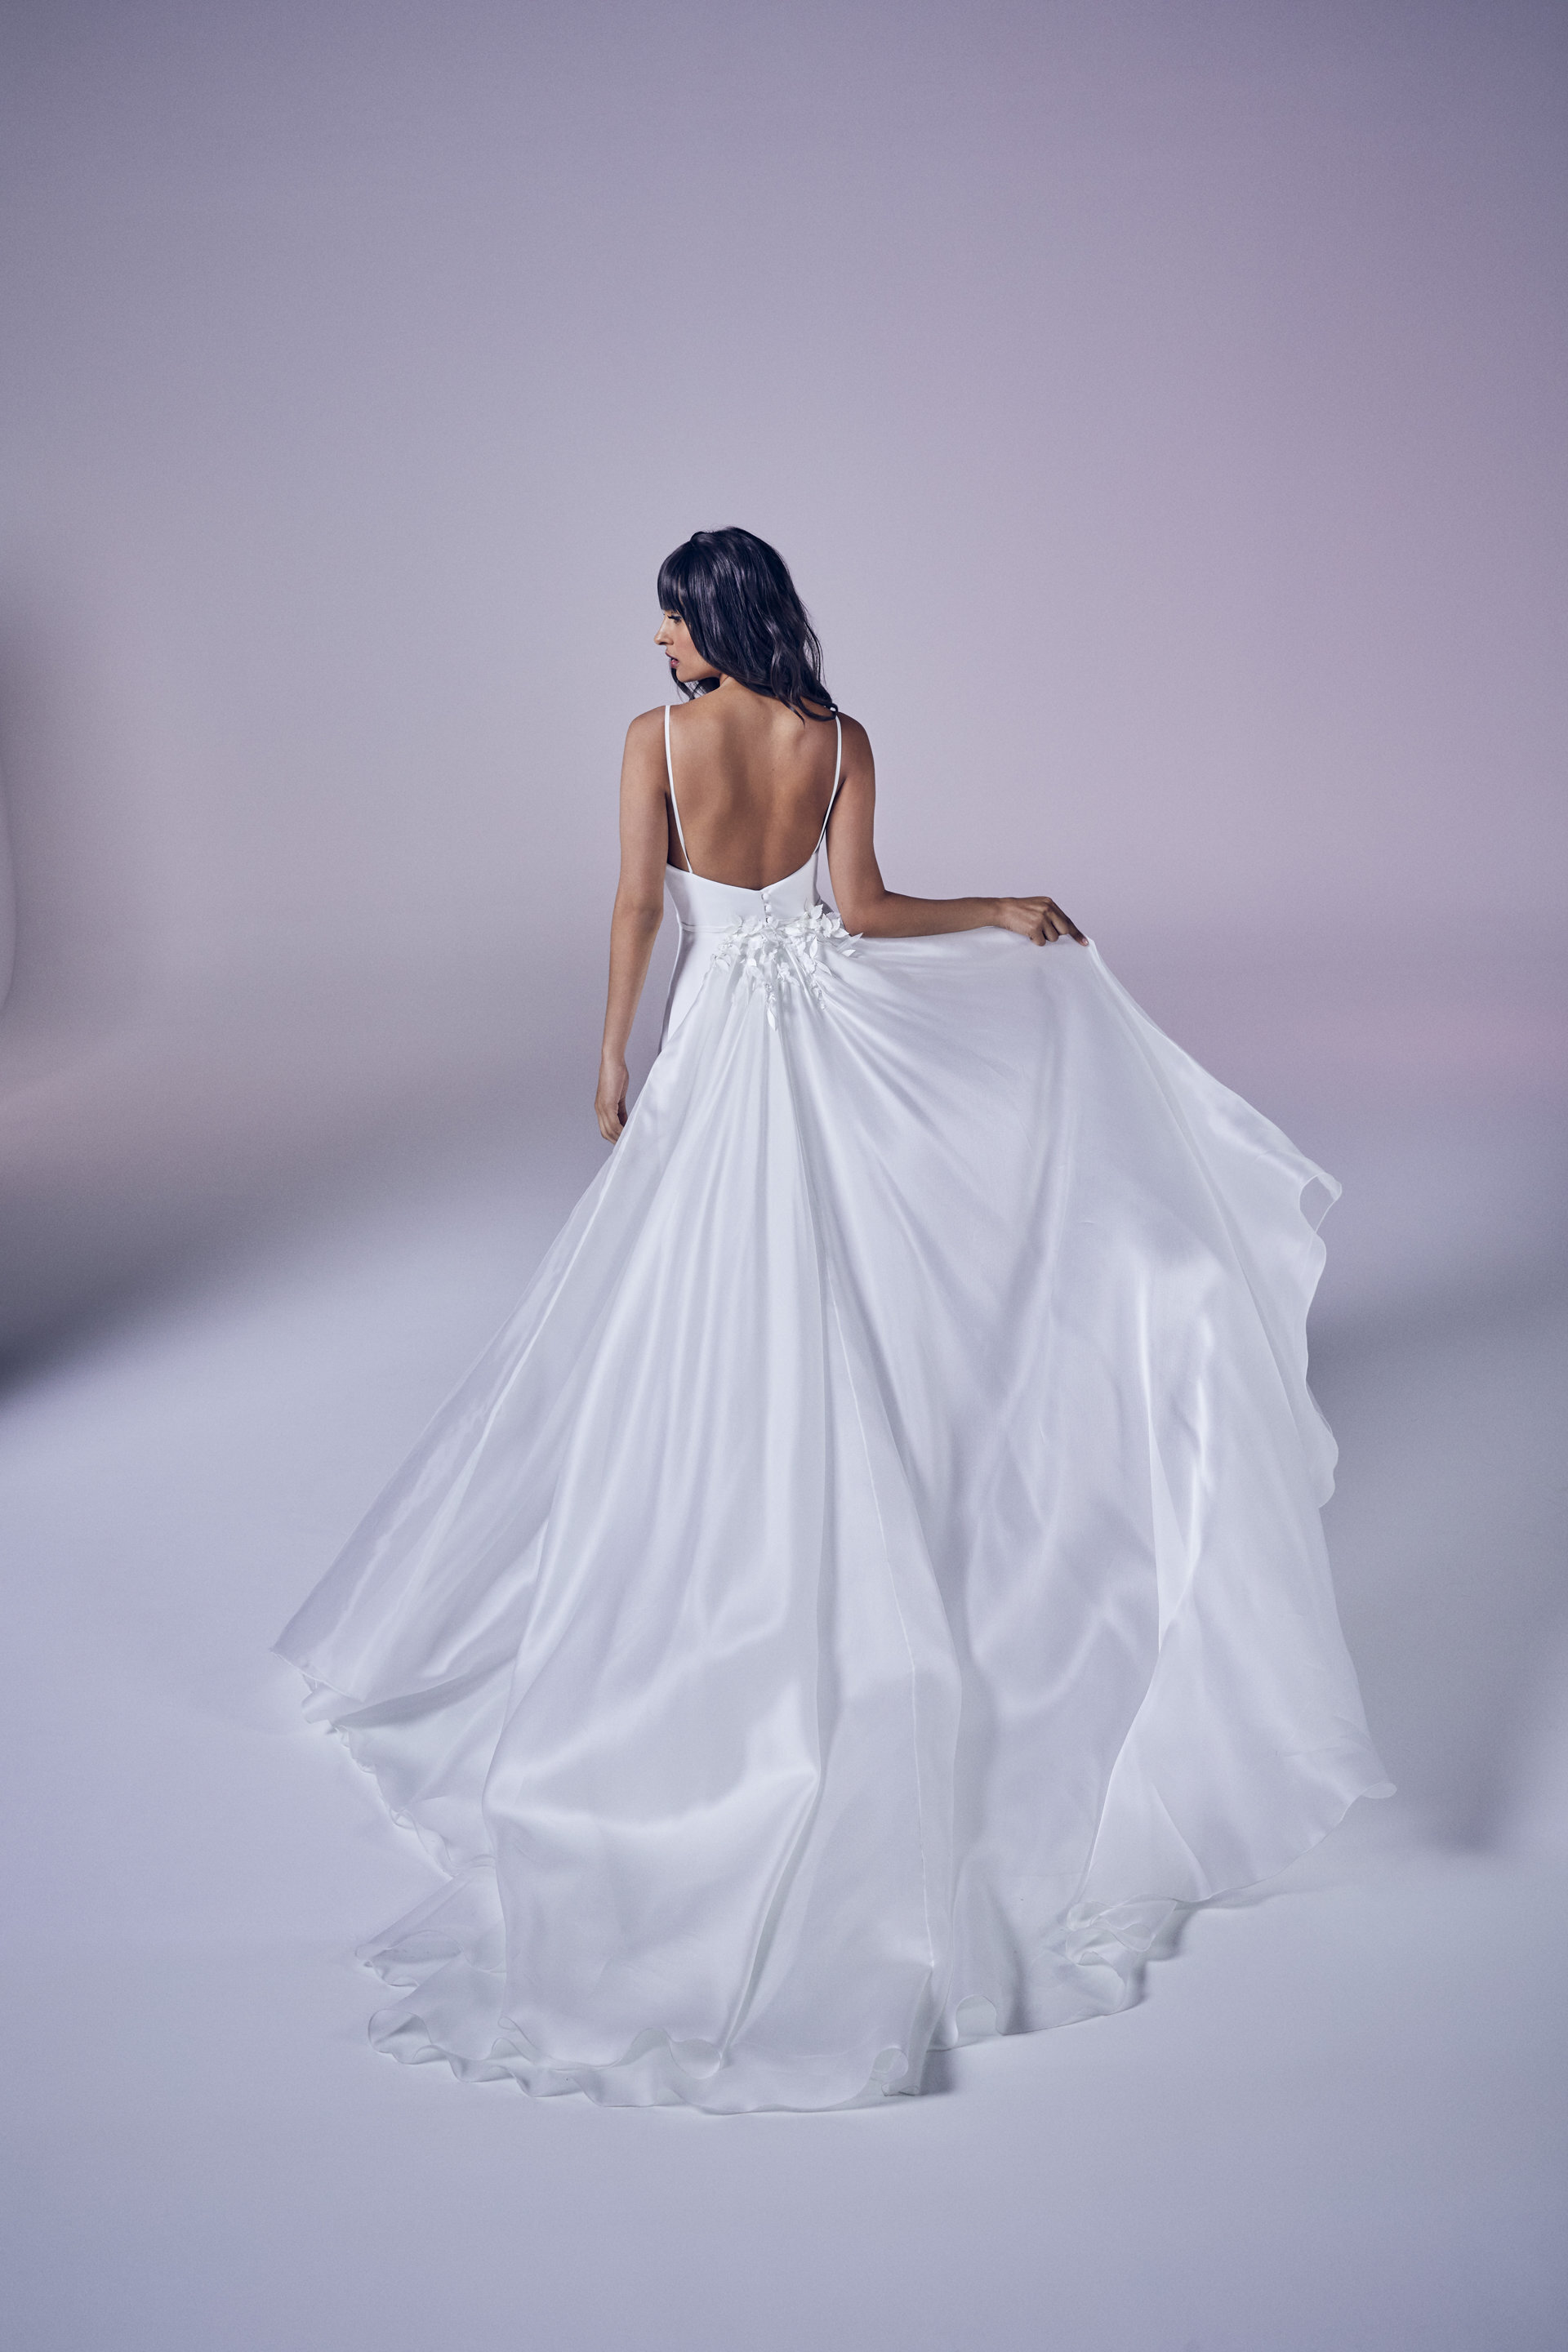 tabitha-dress-romance-train-back-wedding-dresses-uk-suzanne-neville-collection-2021-modern-love-2880.jpg